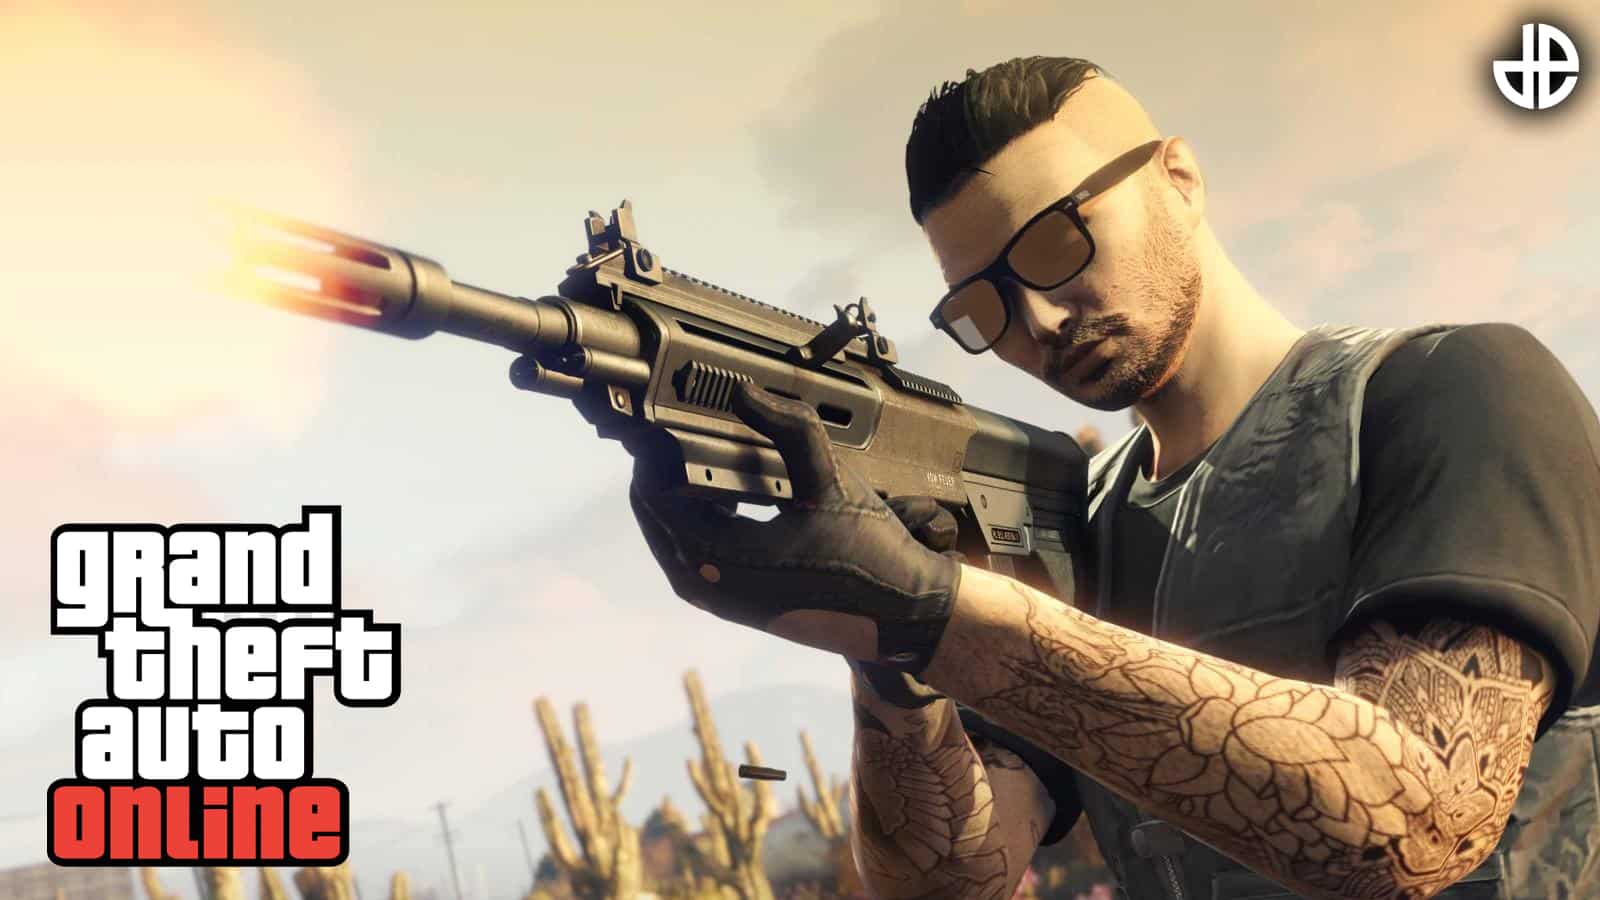 A GTA 5 character holding a gun in GTA Online